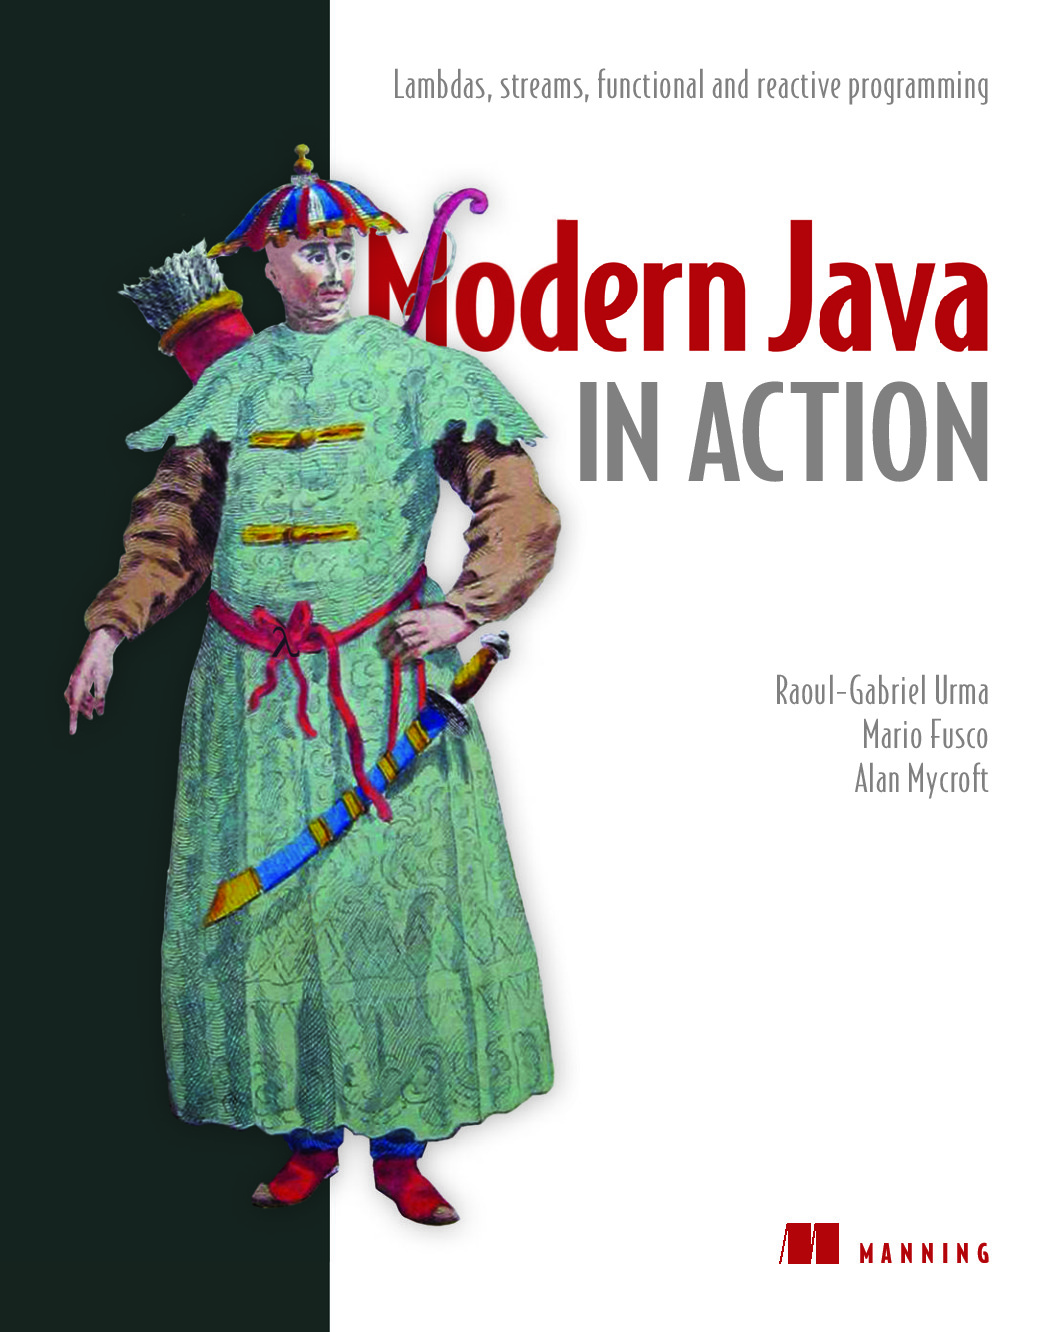 Modern Java in Action – Lambda, streams, functional and reactive programming